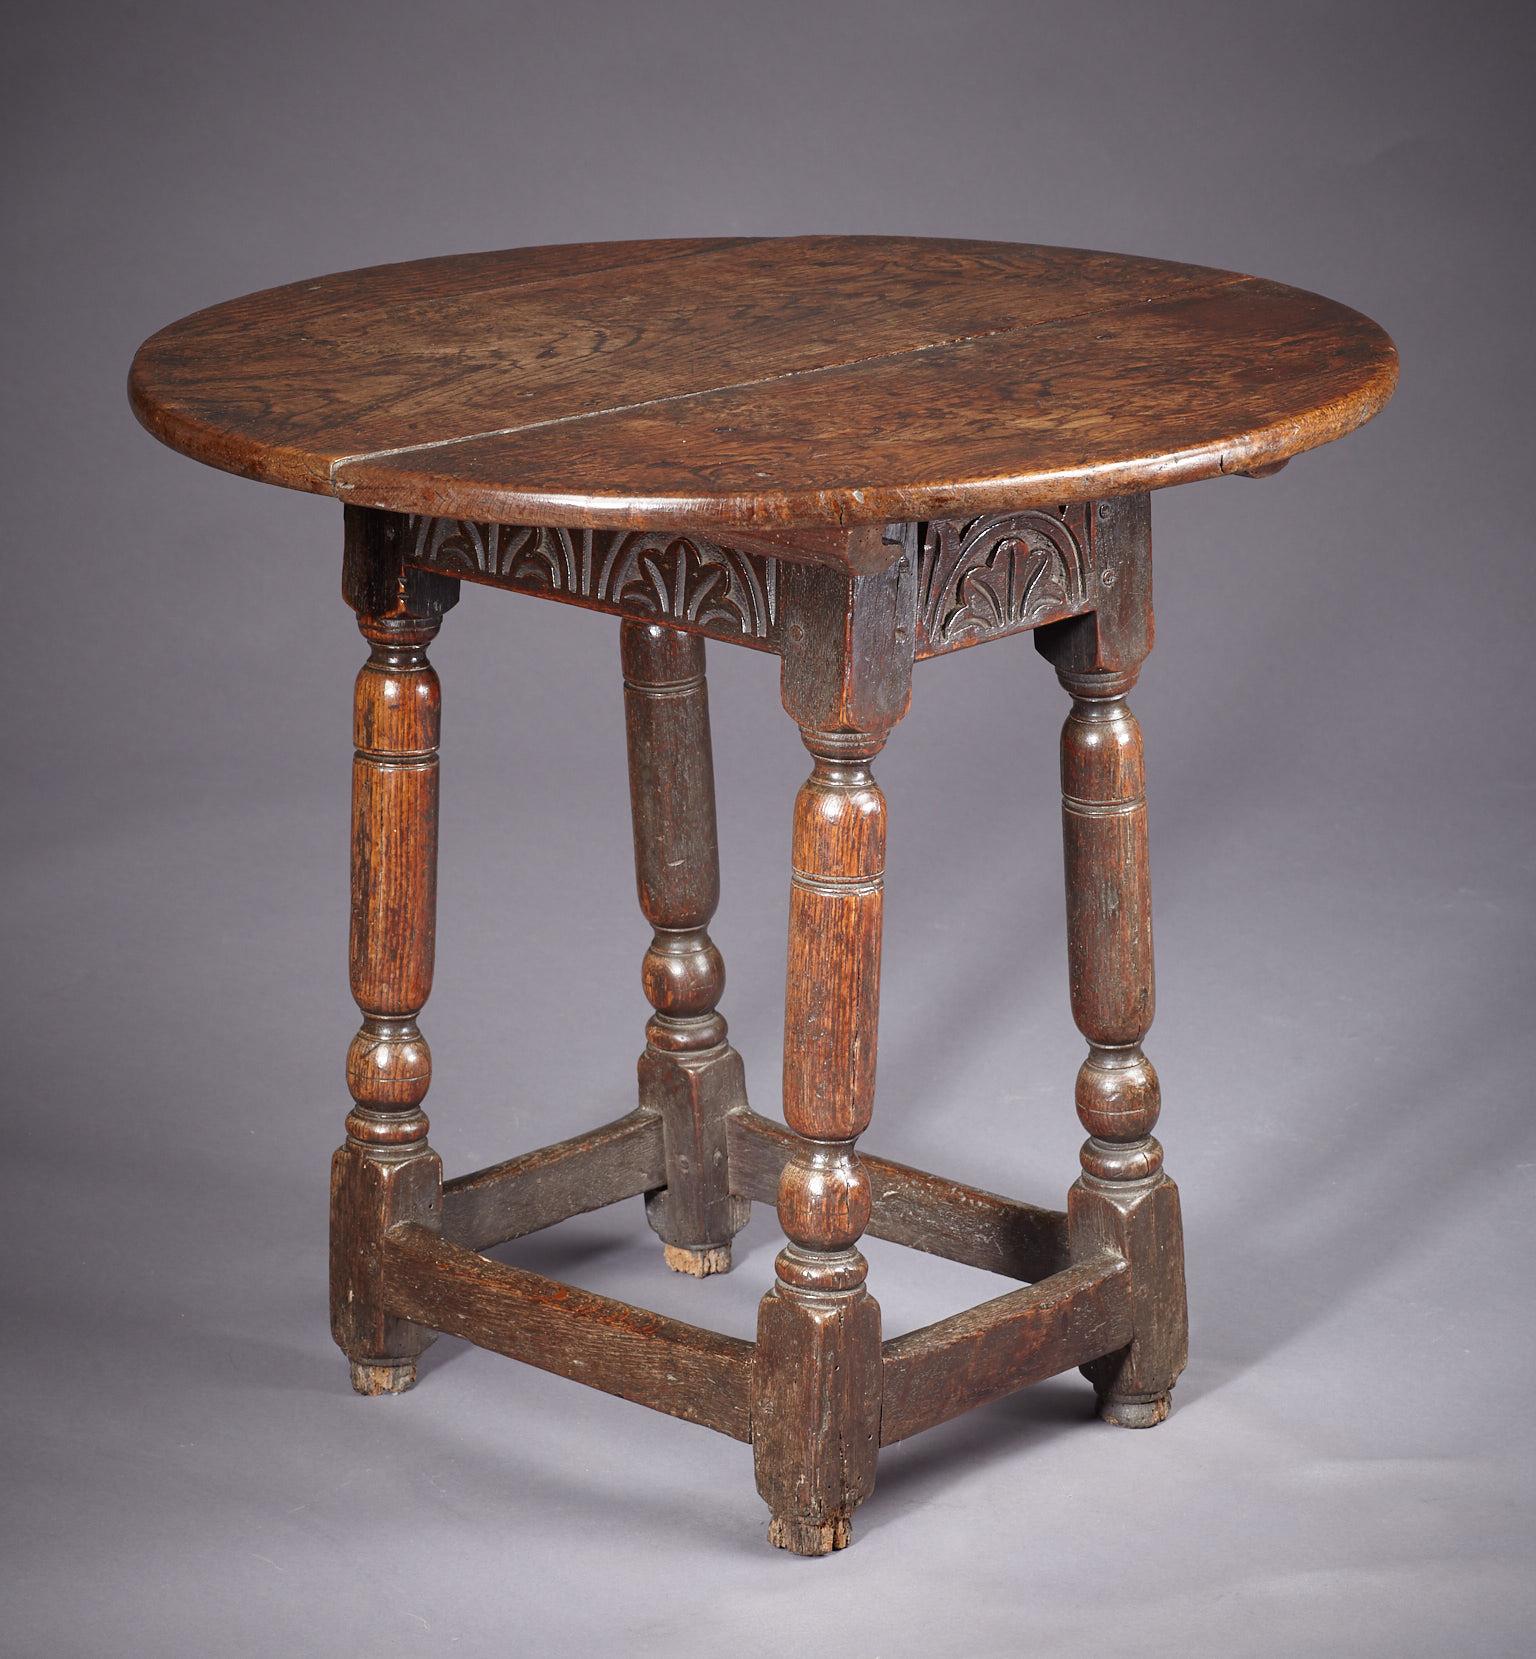 Turned Oak Table Stool, Mid-17th Century English, circa 1640-1650